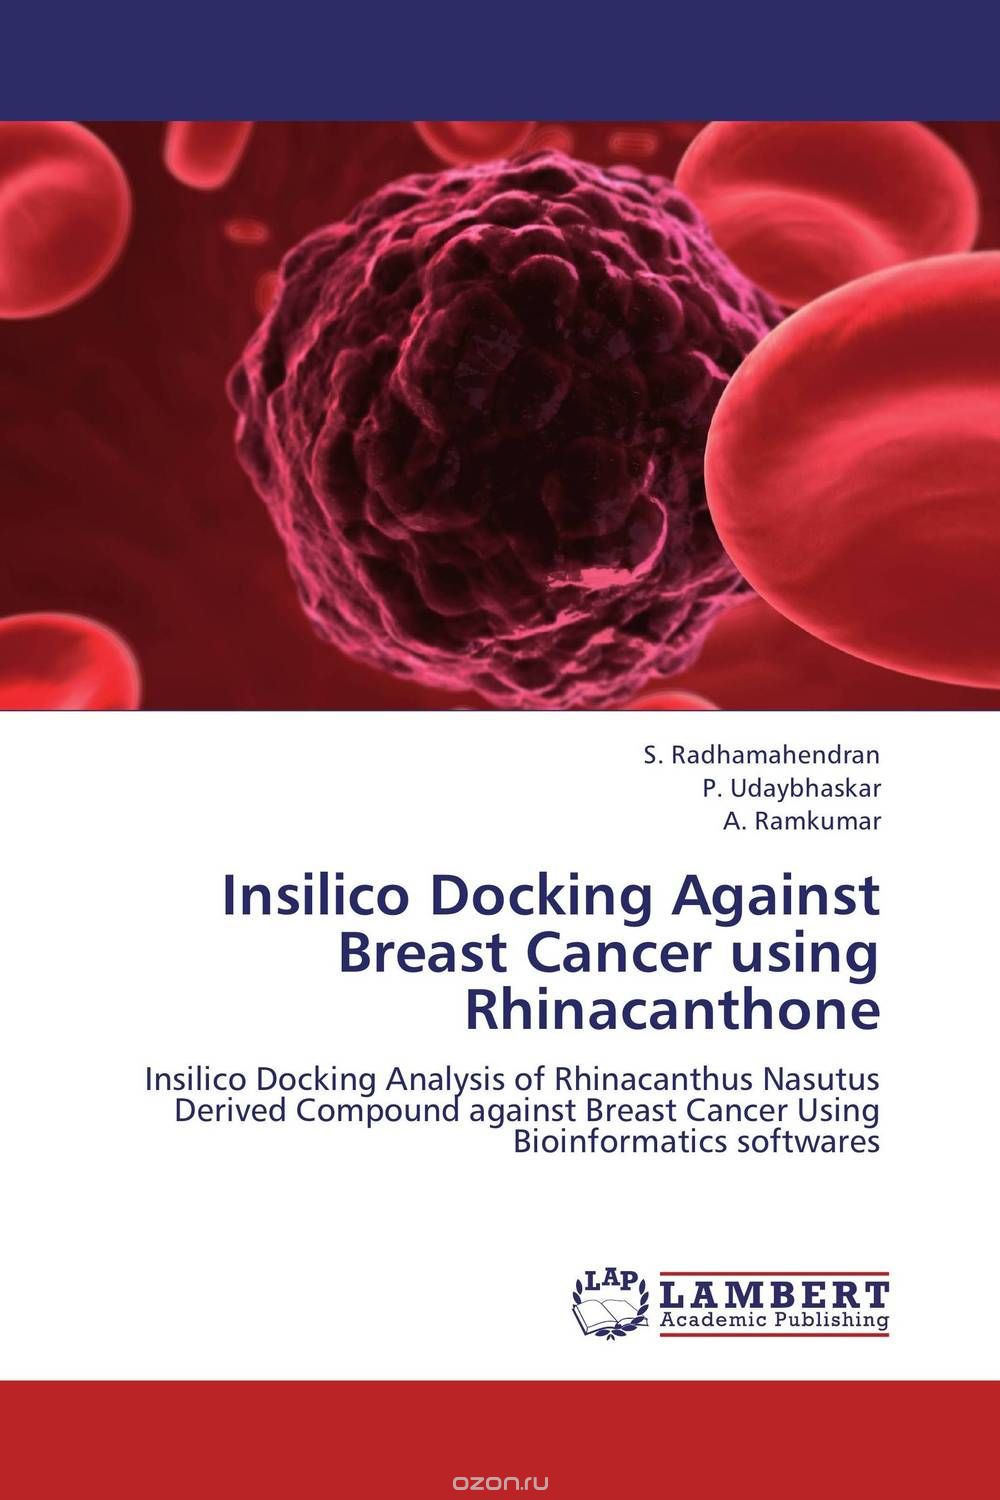 Скачать книгу "Insilico Docking Against Breast Cancer using Rhinacanthone"